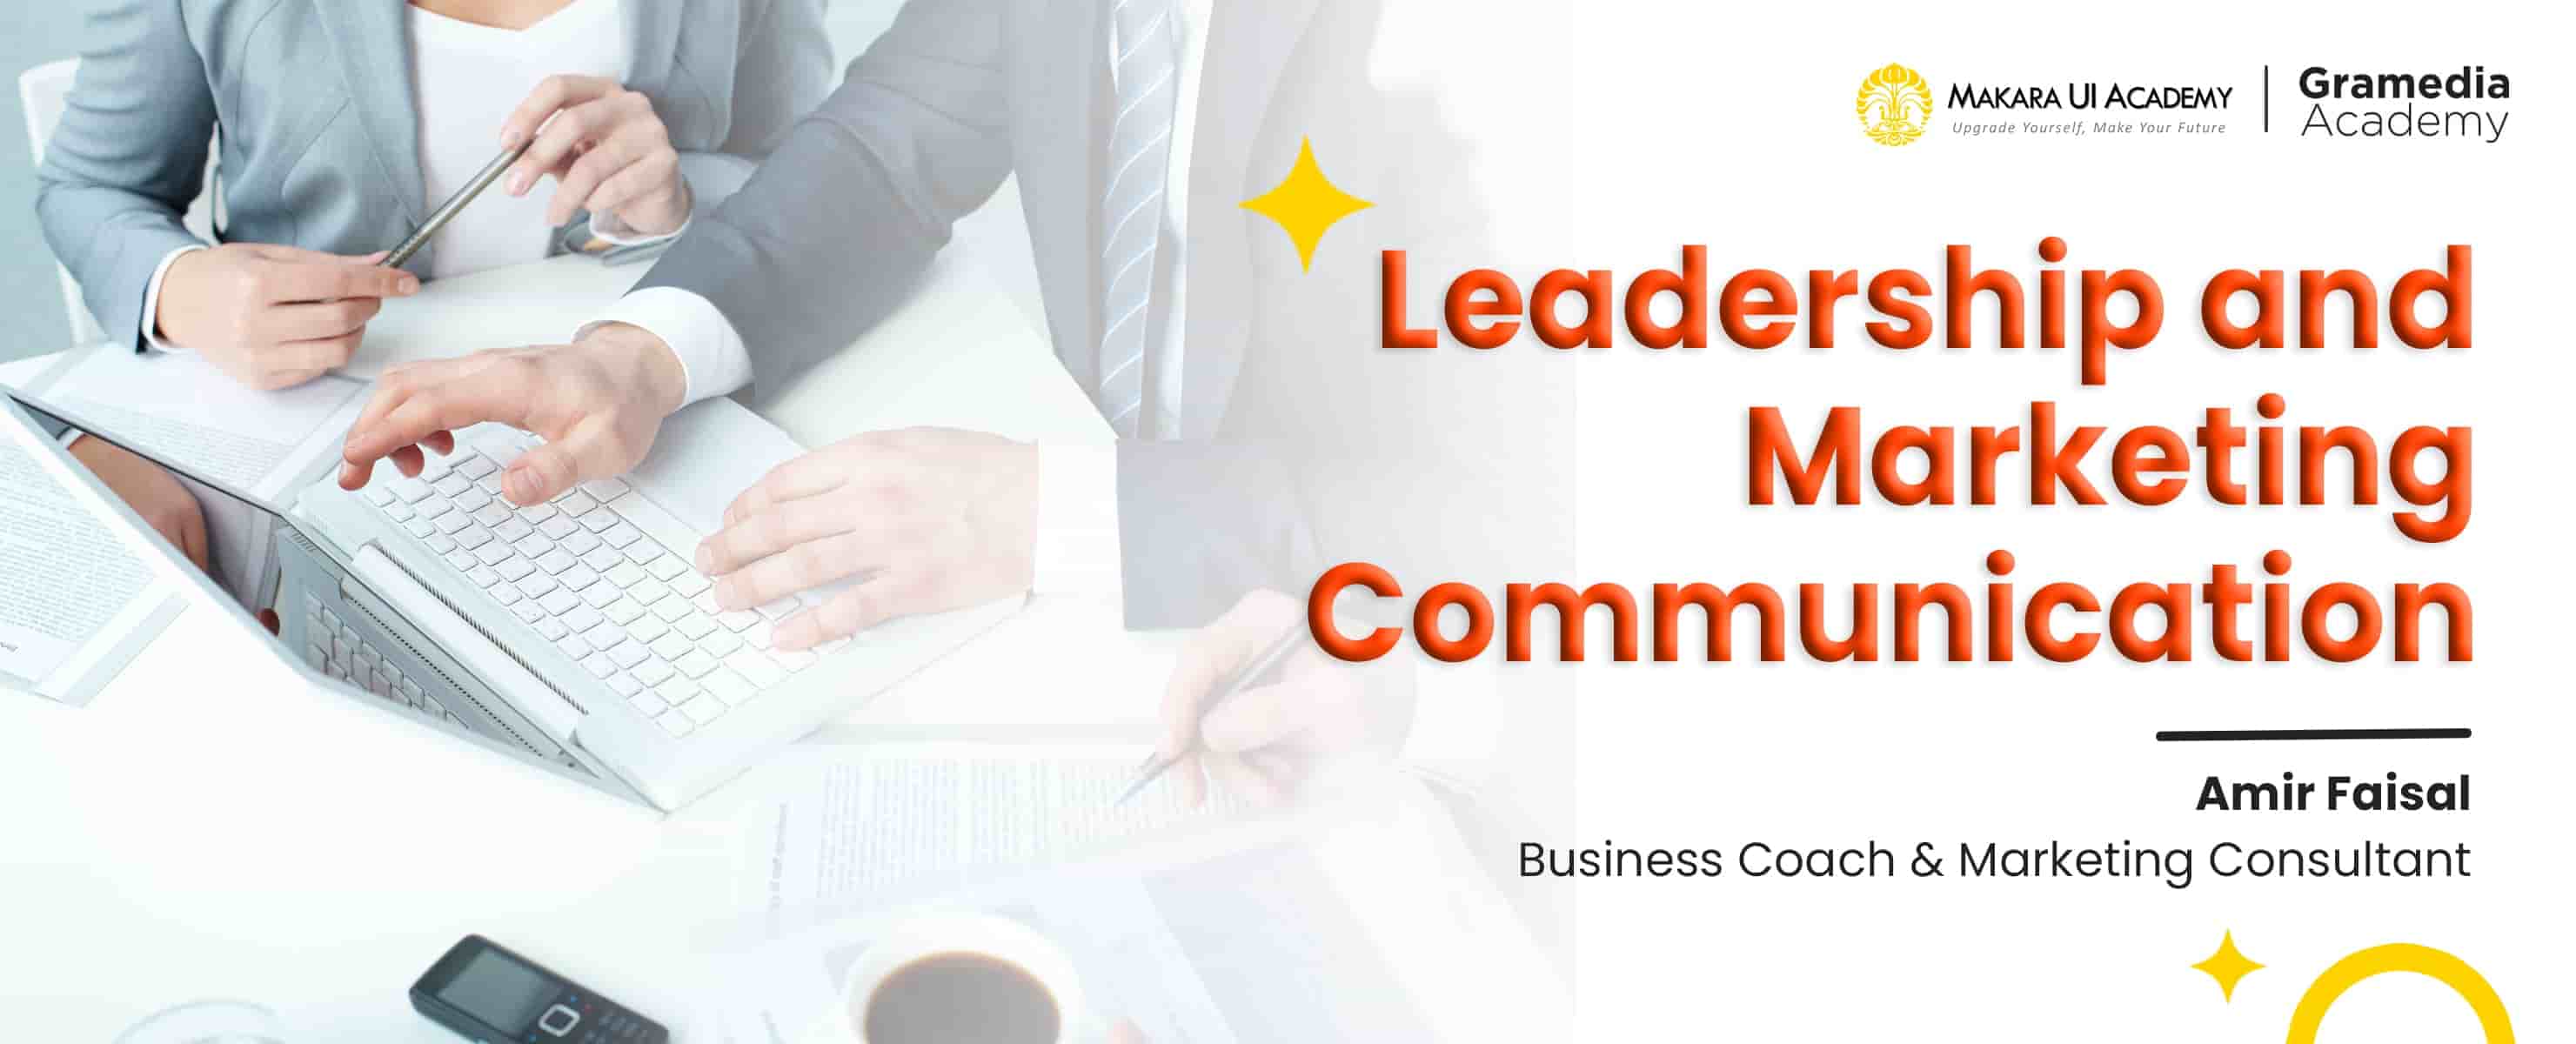 Leadership and Marketing Communication